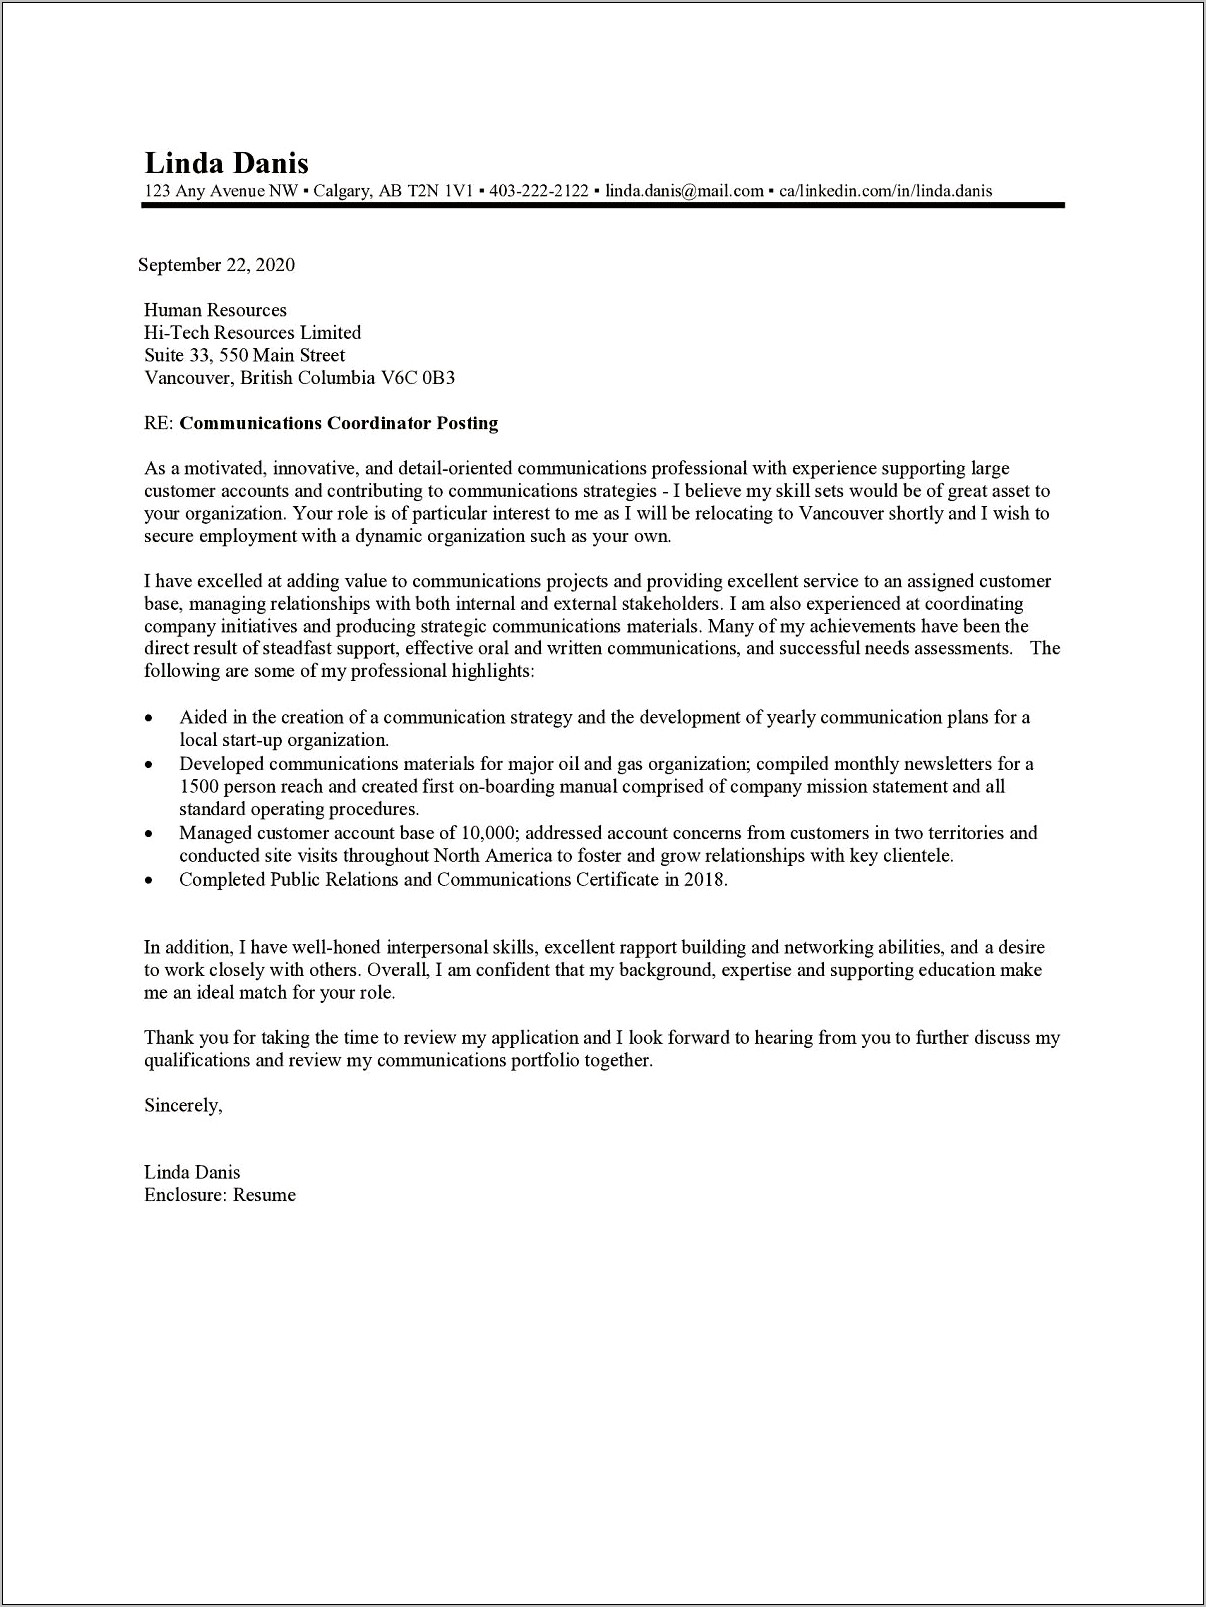 A Sample Resume Cover Letter